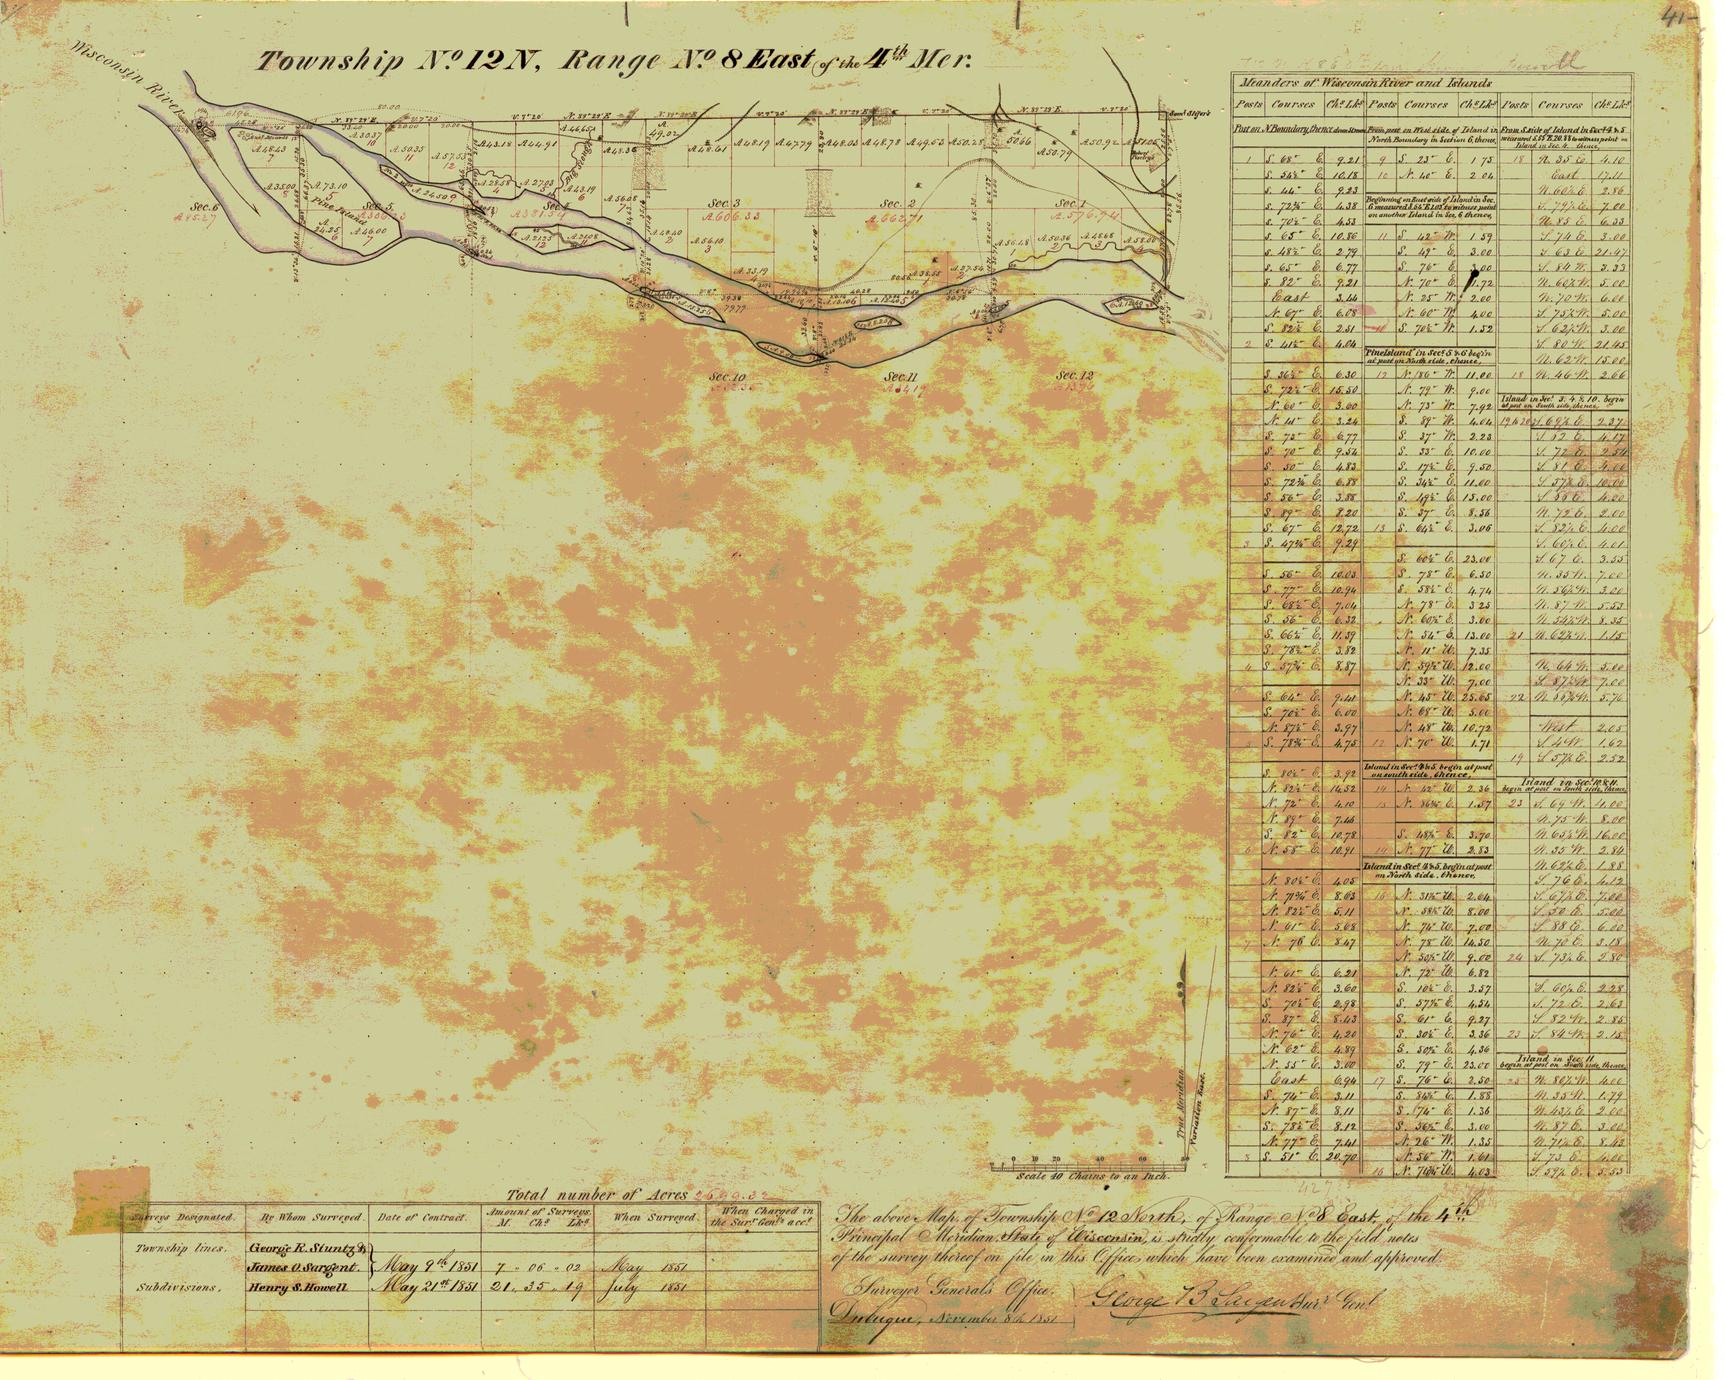 [Public Land Survey System map: Wisconsin Township 12 North, Range 08 East]